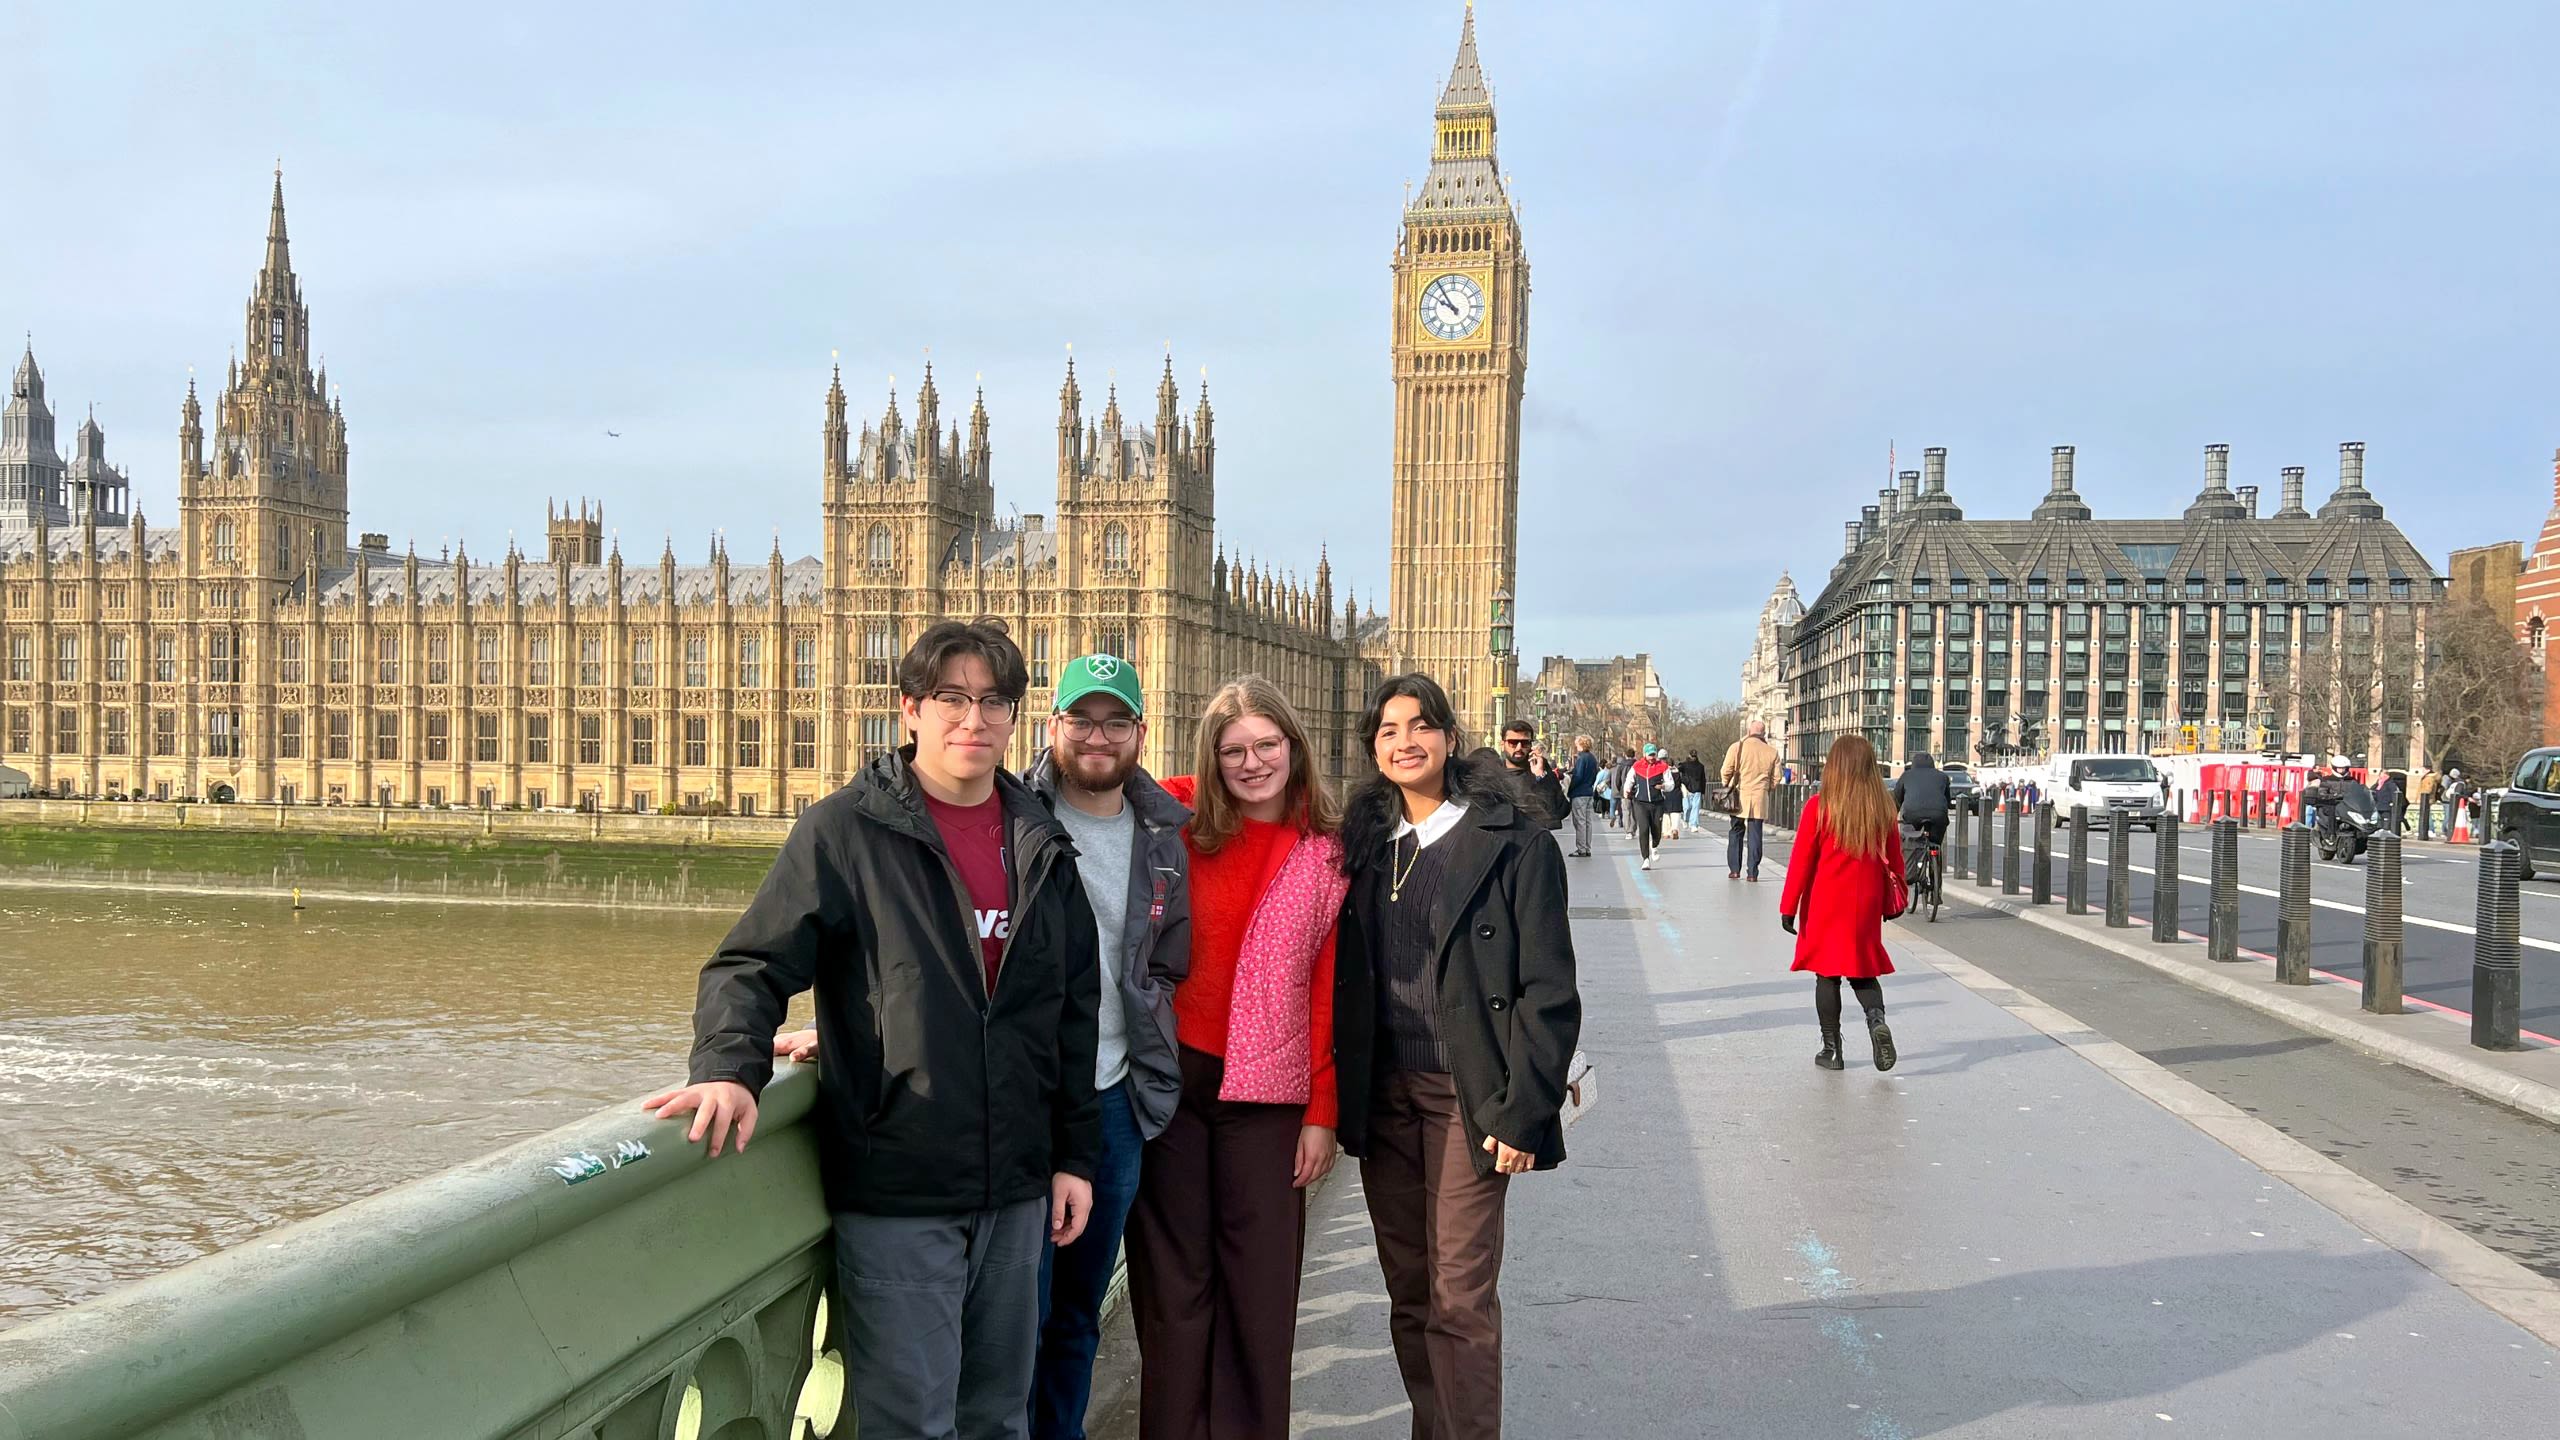 l-r) Mendoza Debate Society members Diego Moreno, Jerry McCauley, Rebecca Currie and Priscilla Guerra in front of Big Ben landmark in London.